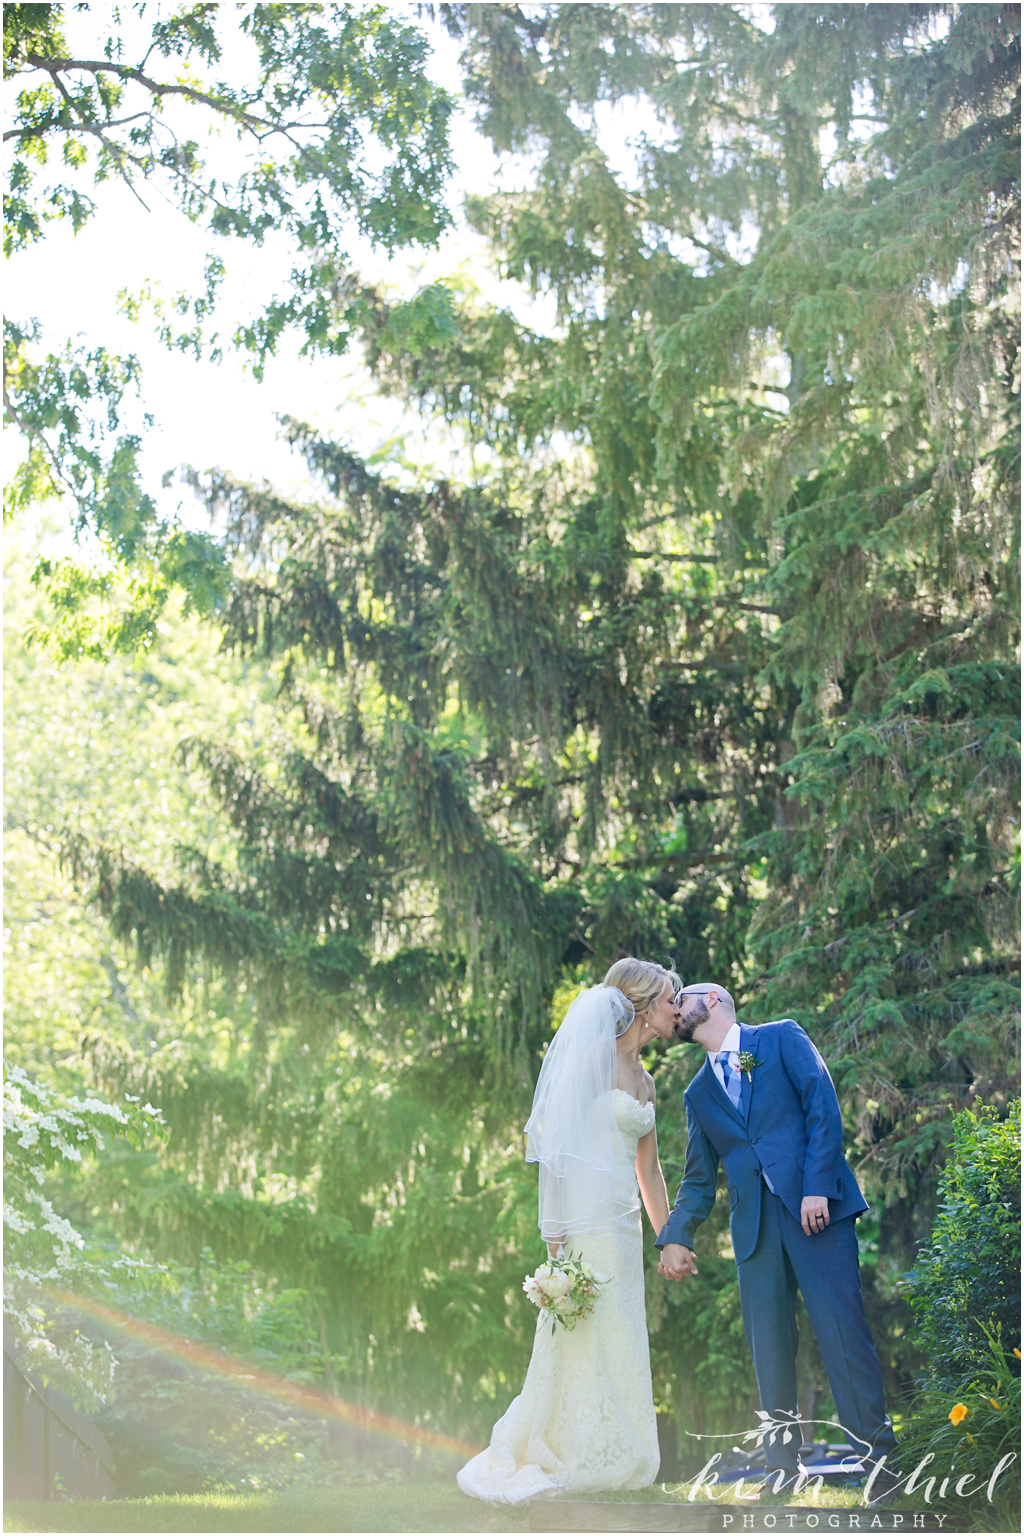 Kim-Thiel-Photography-Indiana-Wedding-Photographer-33, Romantic Backyard Indiana Wedding